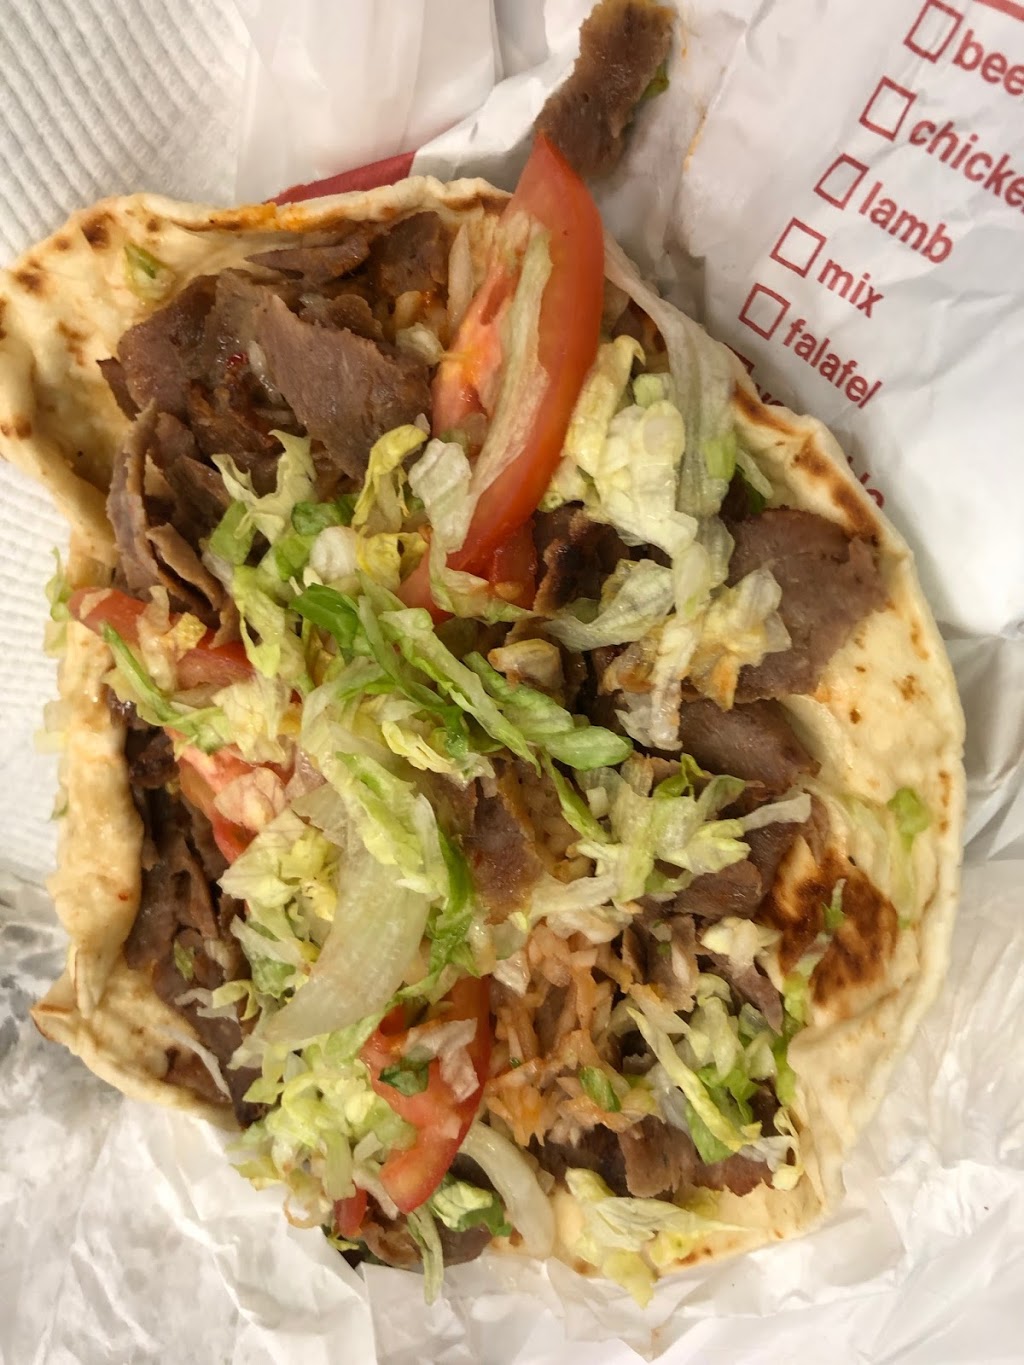 TC Brothers Kebab | meal takeaway | 199B Canterbury Rd, Bankstown NSW 2200, Australia | 0297900444 OR +61 2 9790 0444